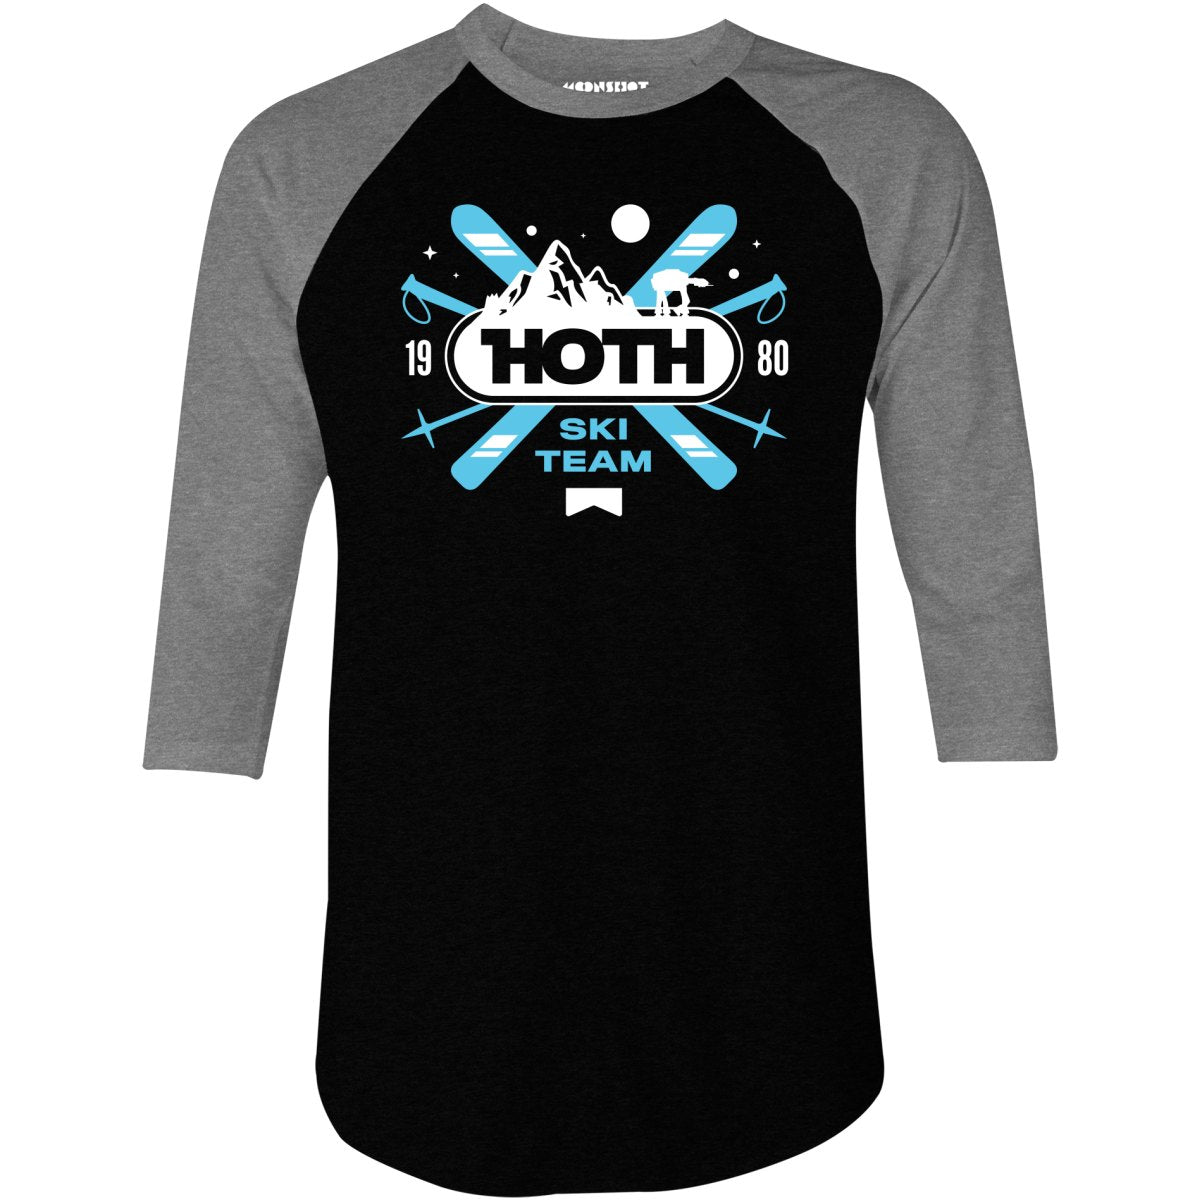 Hoth Ski Team - 3/4 Sleeve Raglan T-Shirt